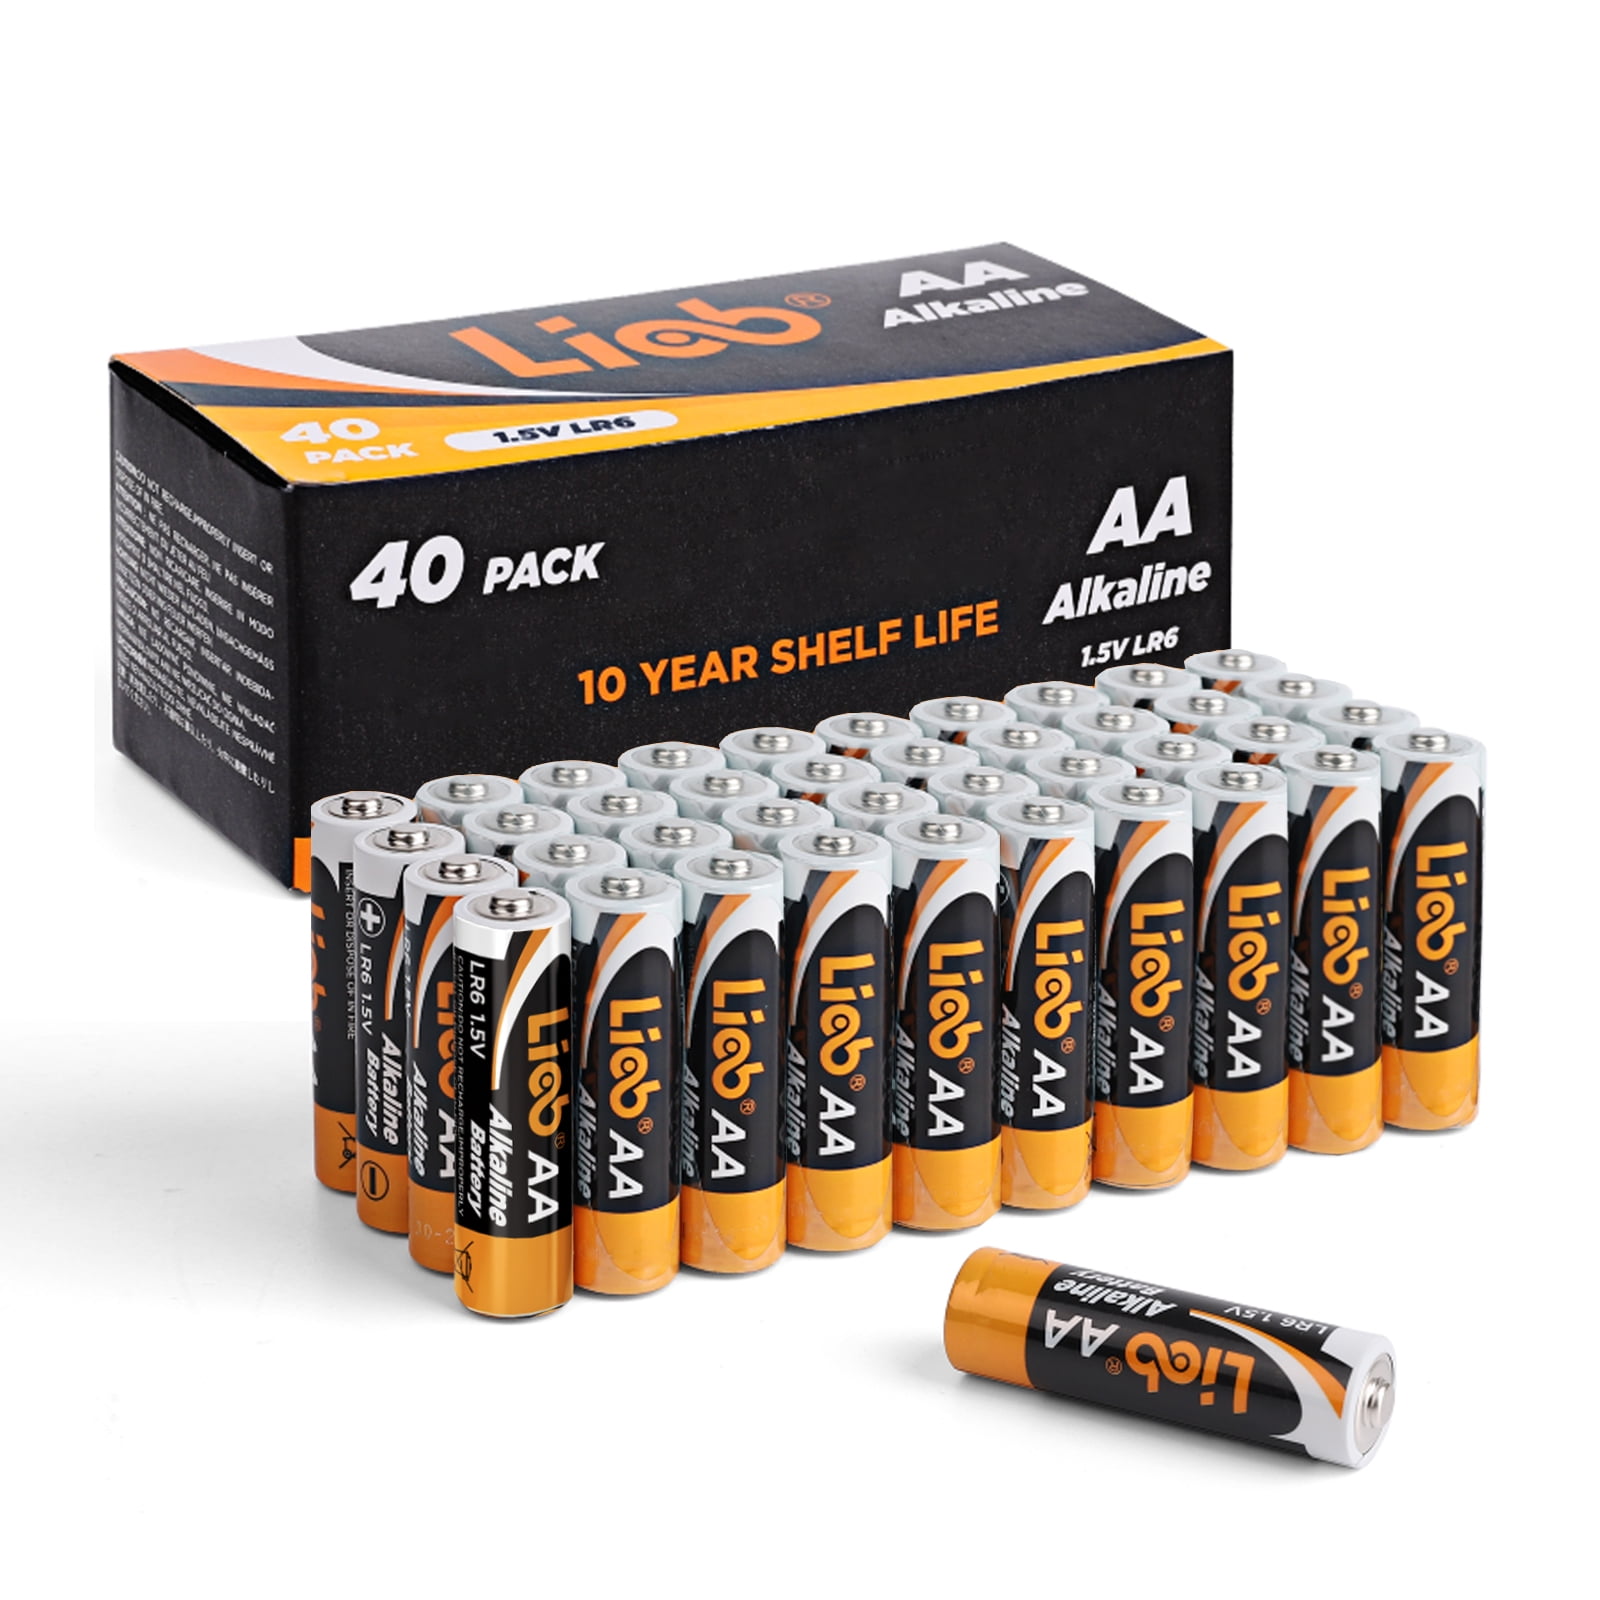 Pilas Alcalinas AA 1.5v, 40 pcs - Duracell Power Boost MN15TB40 